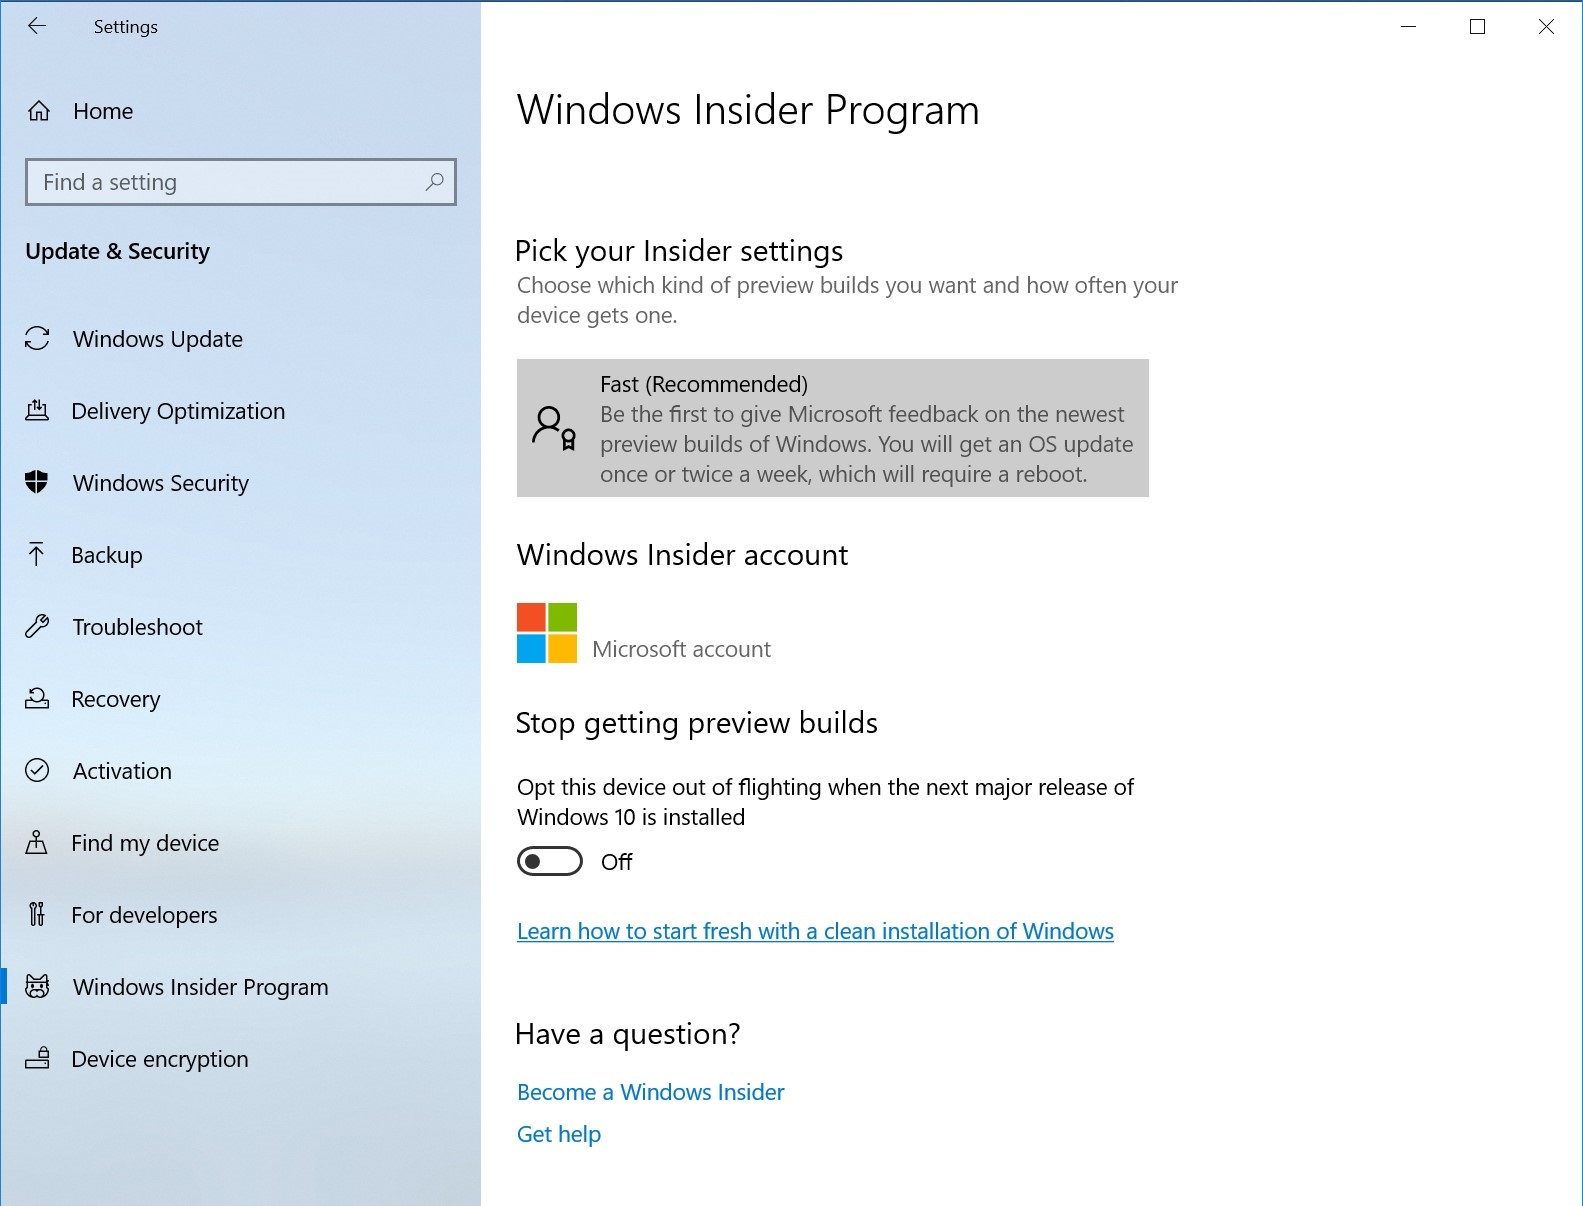 New simplified Windows Insider Program Settings page via Settings > Update & Security > Windows Insider Program.